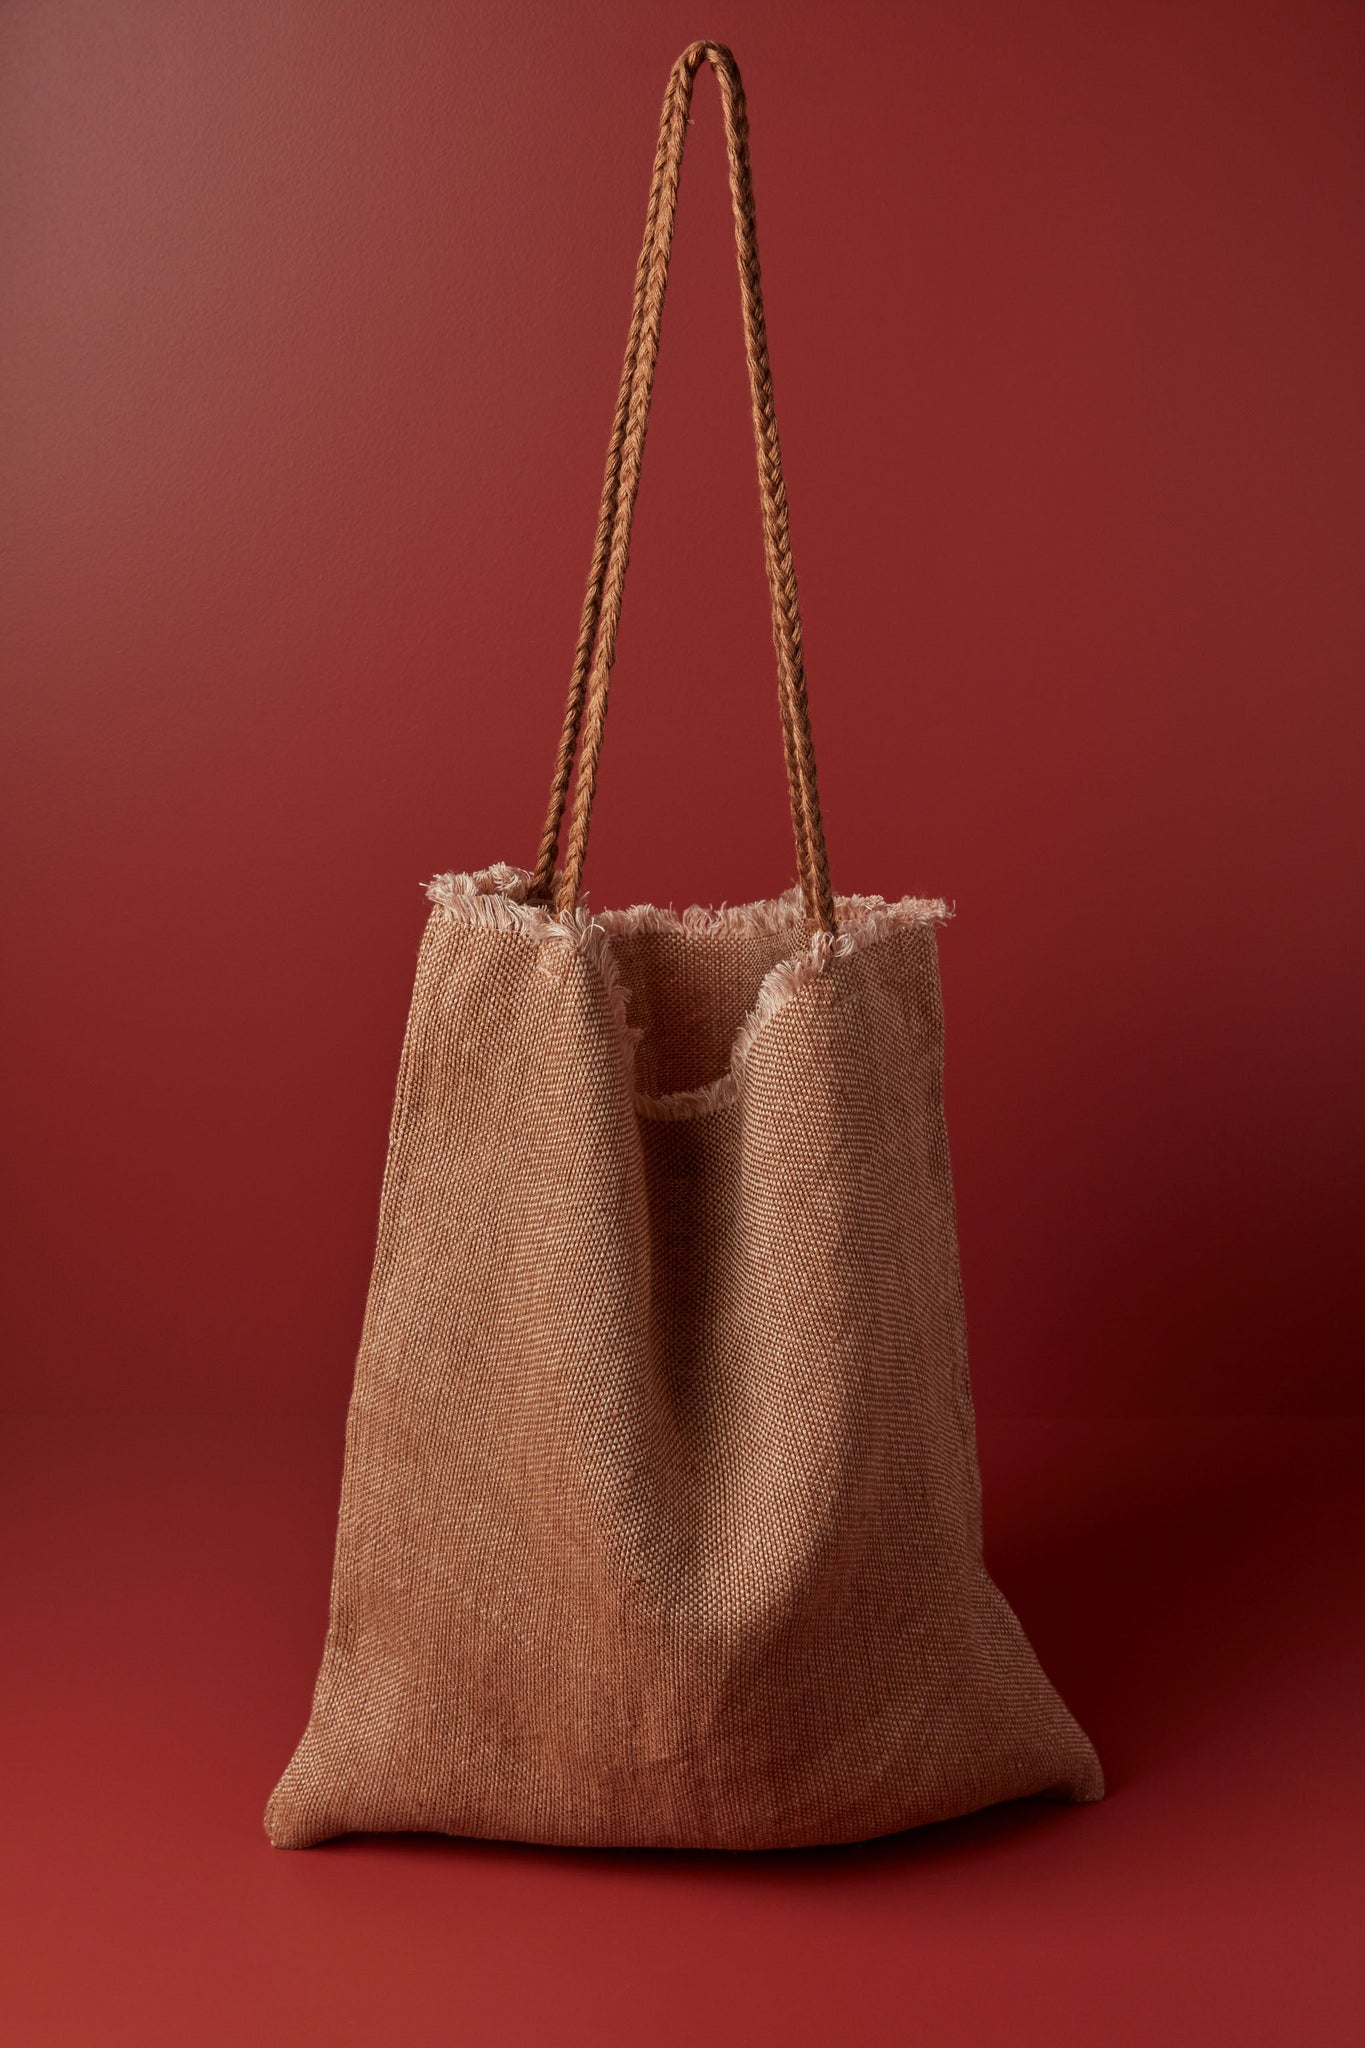 Sundance Studio - Woven bag, Toffee